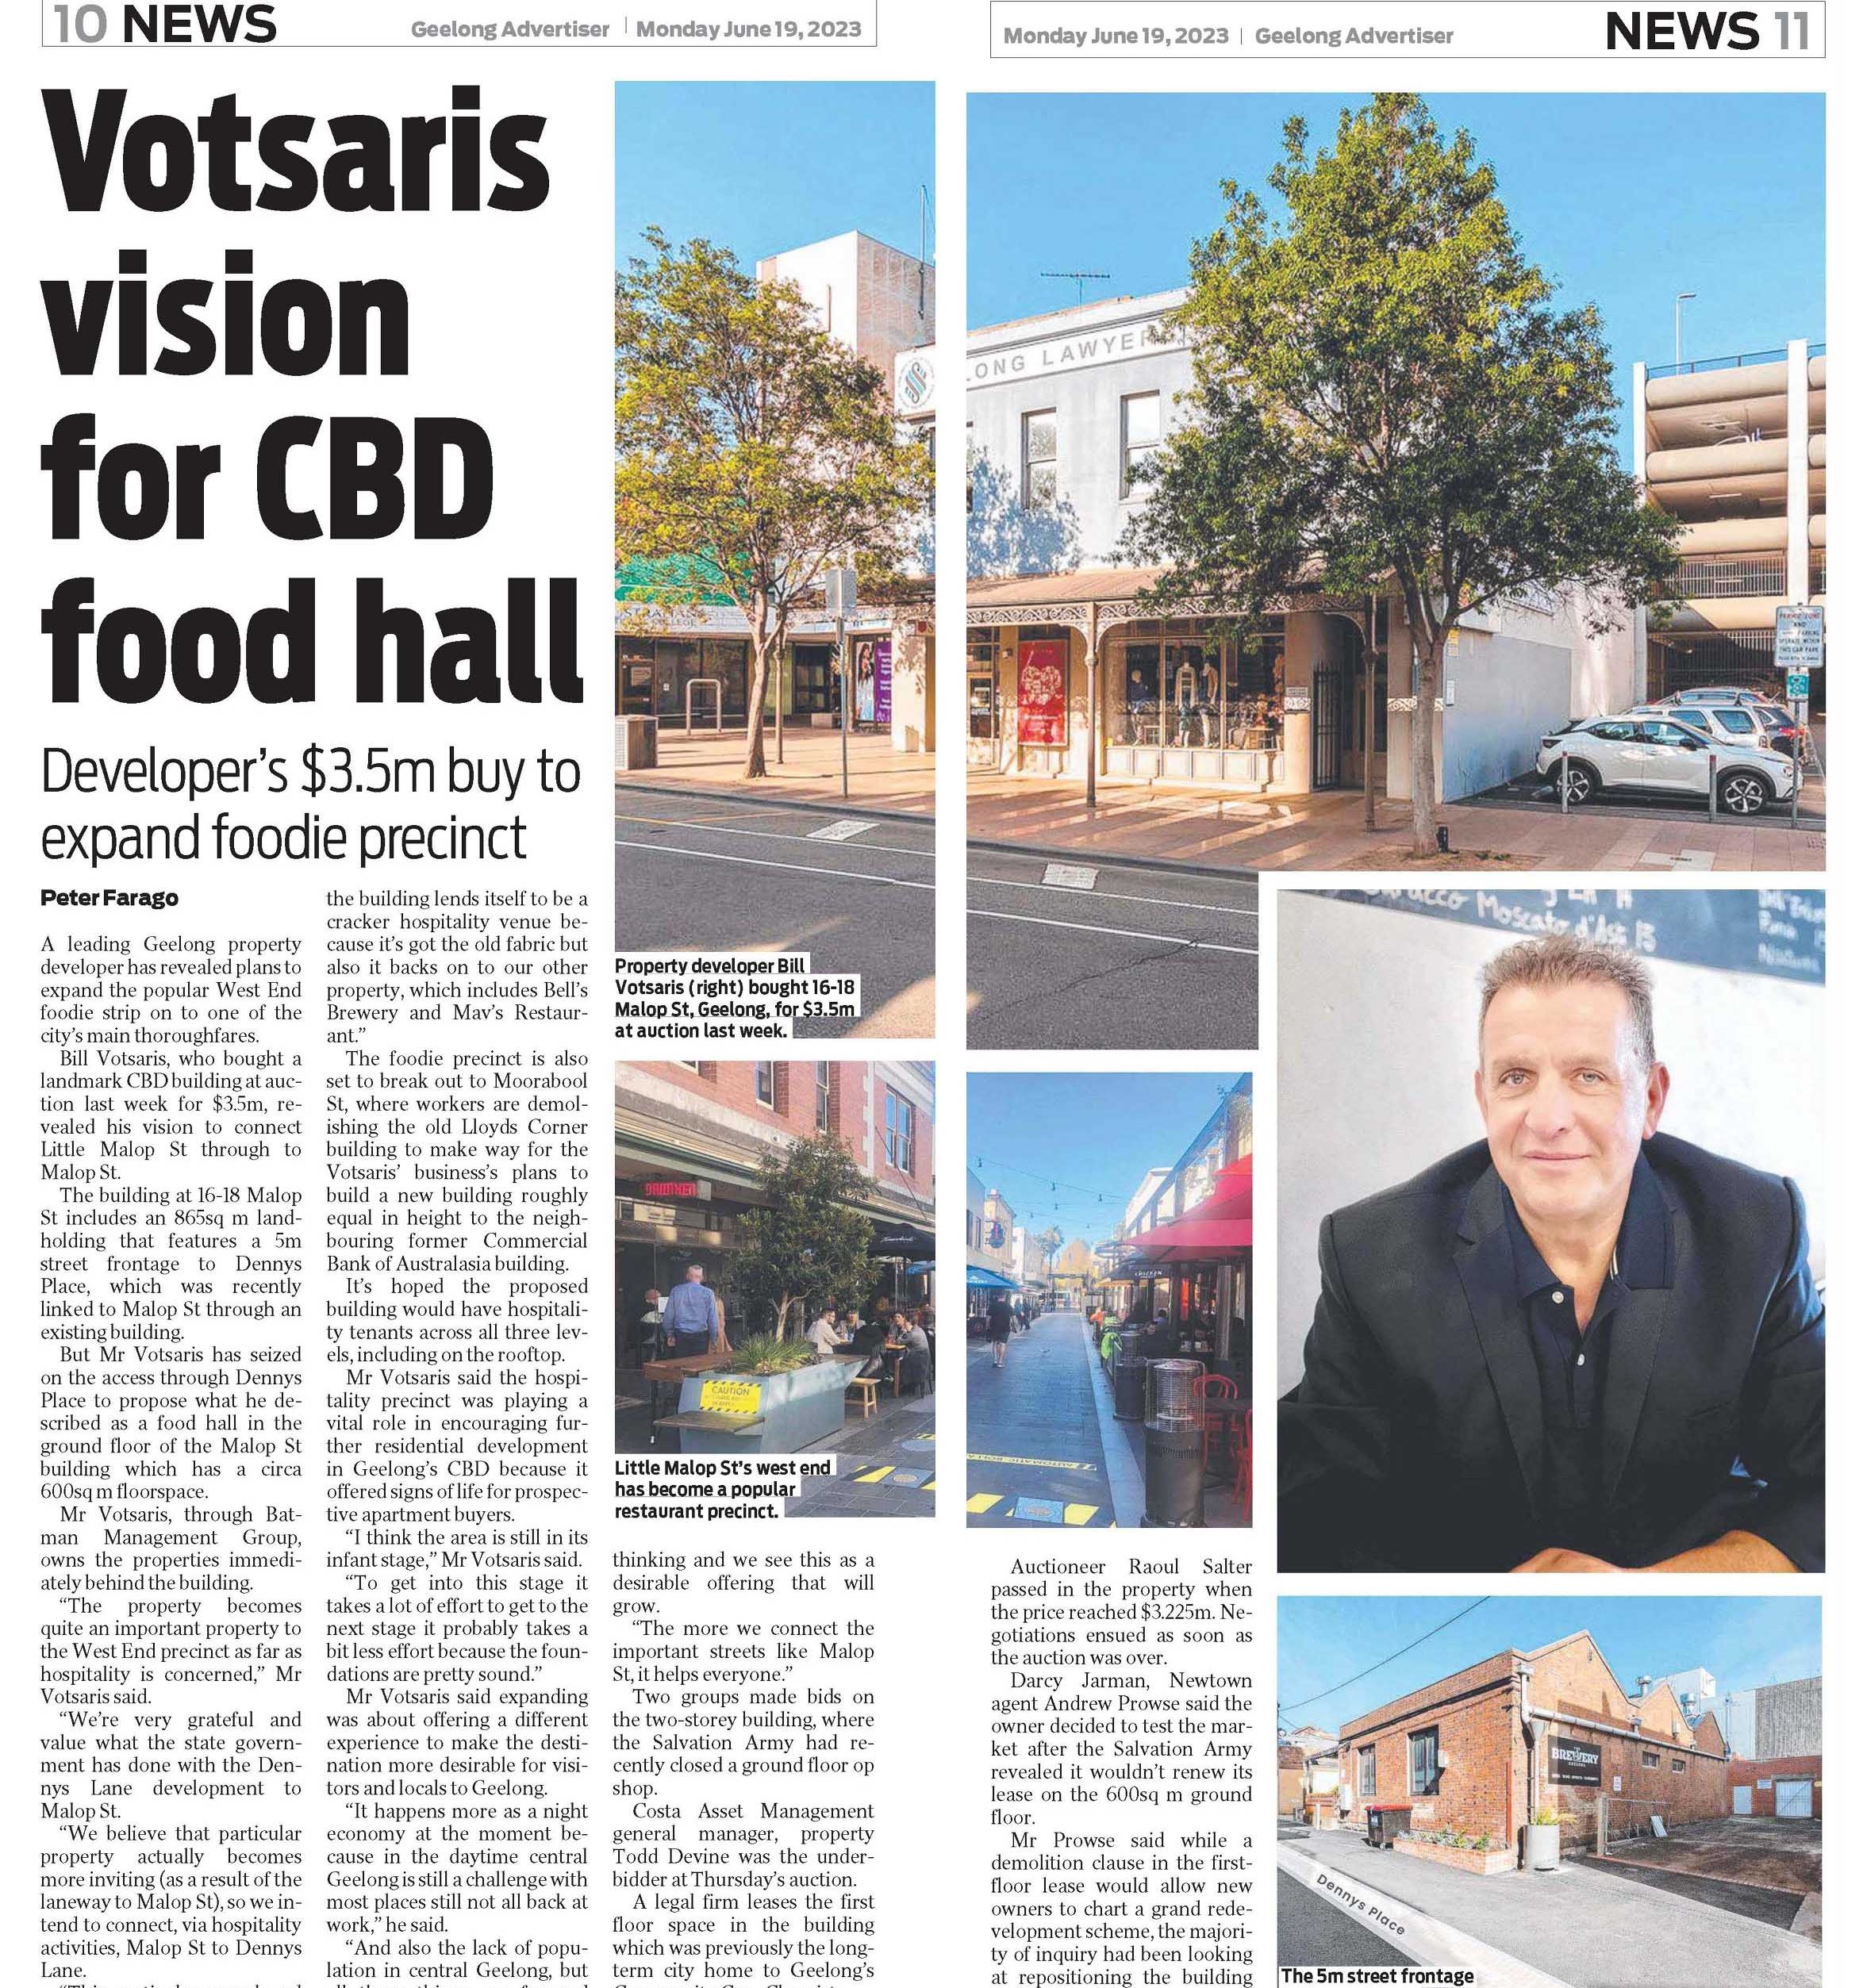 Geelong’s eat street expansion set after landmark property sells